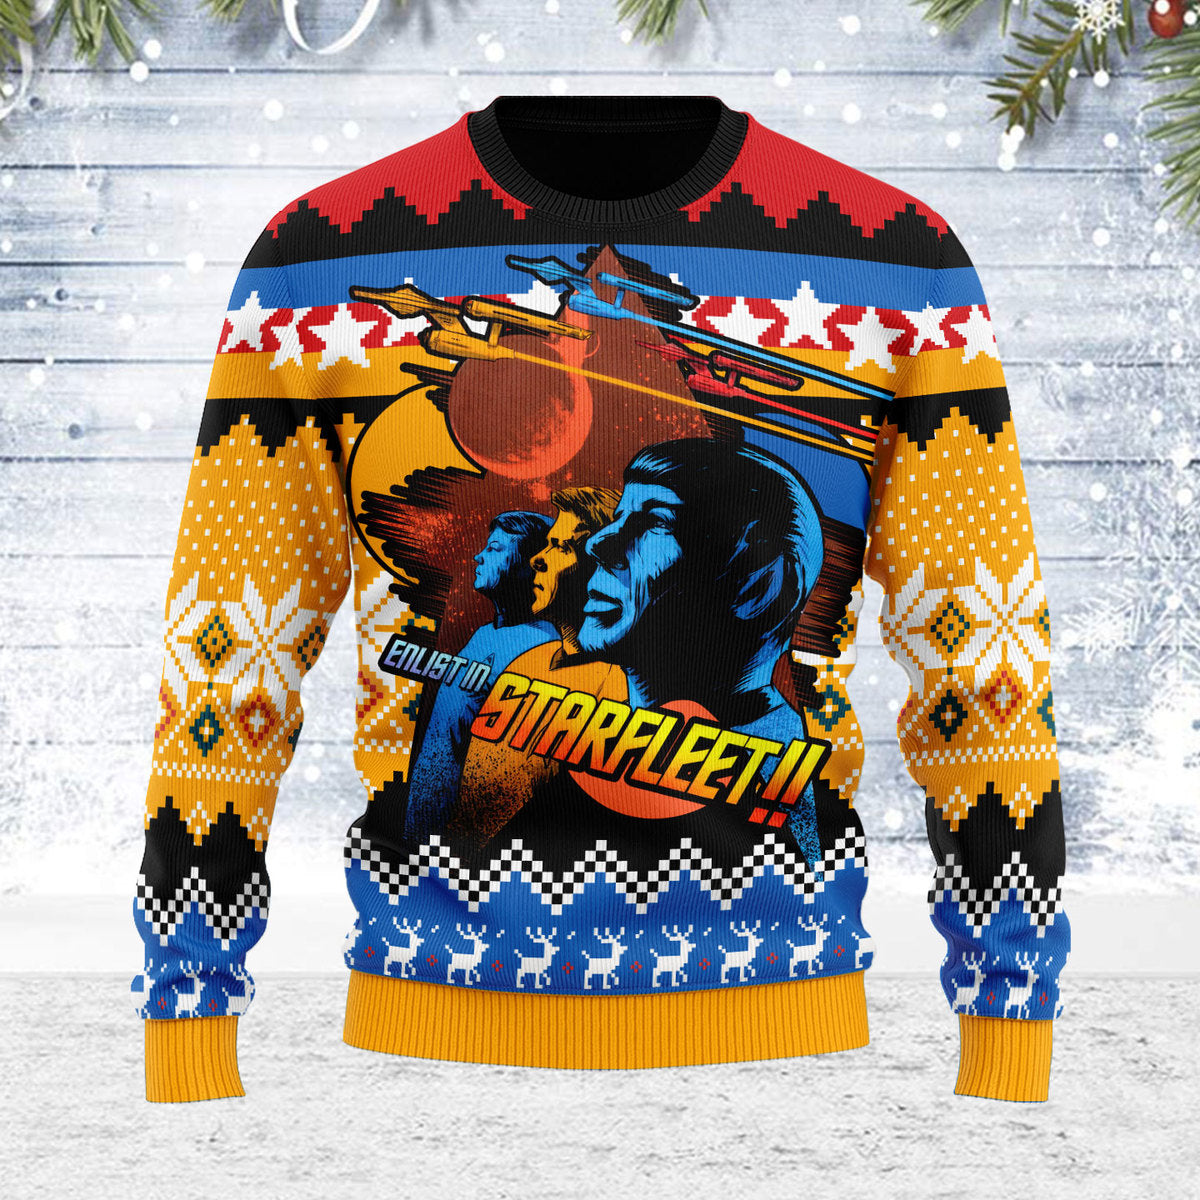 Star Trek Enlist in Starfleet!! Christmas - Sweater - Ugly Christmas Sweater